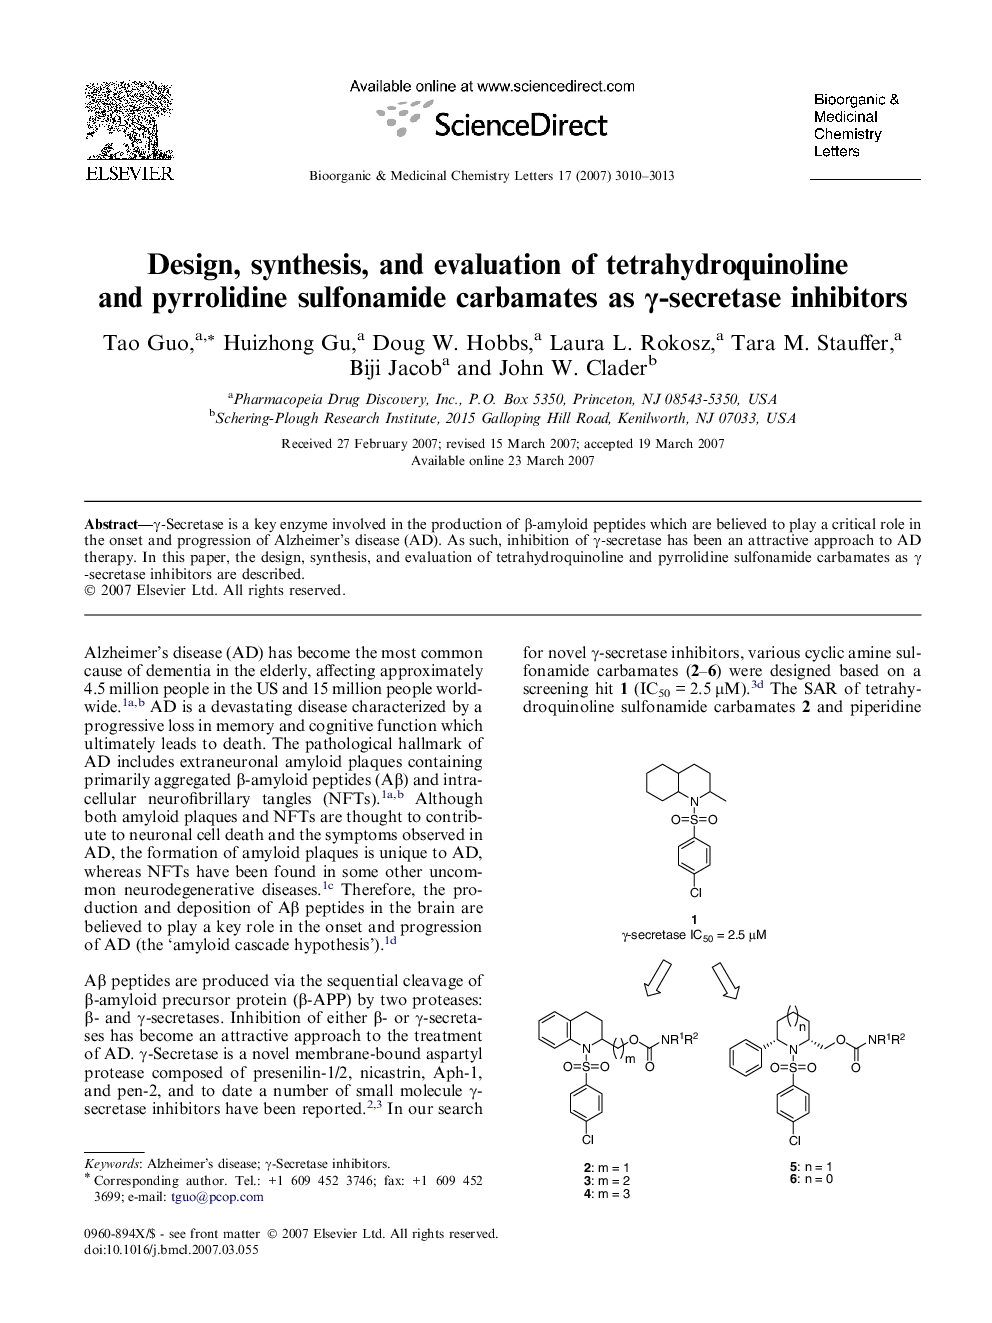 Design, synthesis, and evaluation of tetrahydroquinoline and pyrrolidine sulfonamide carbamates as γ-secretase inhibitors